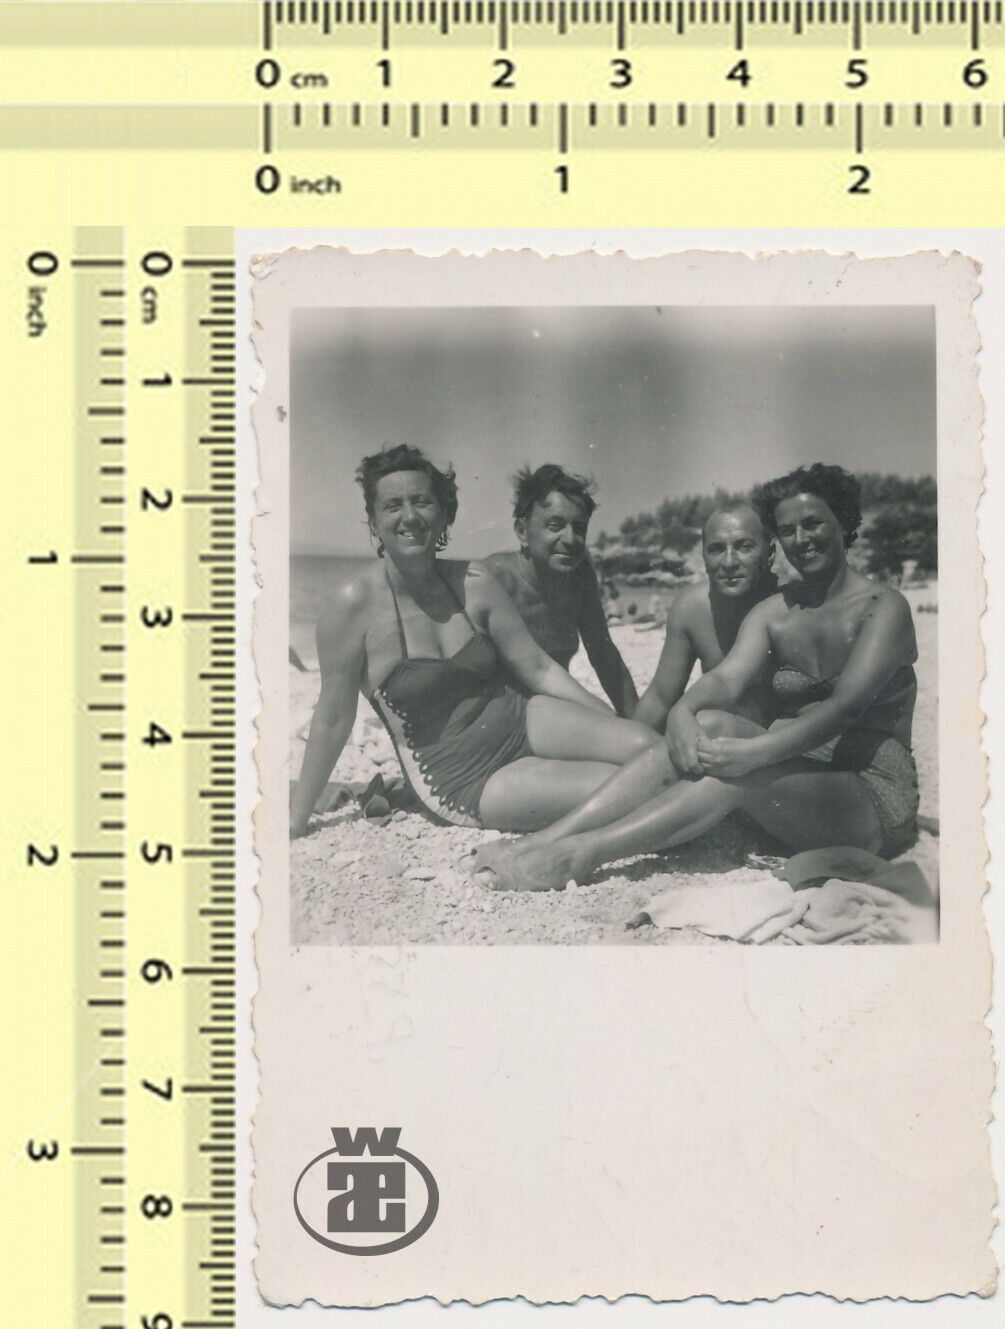 155 1958 Swimsuit Women Swimwear Ladies Guys Beach Couples vintage photo orig.